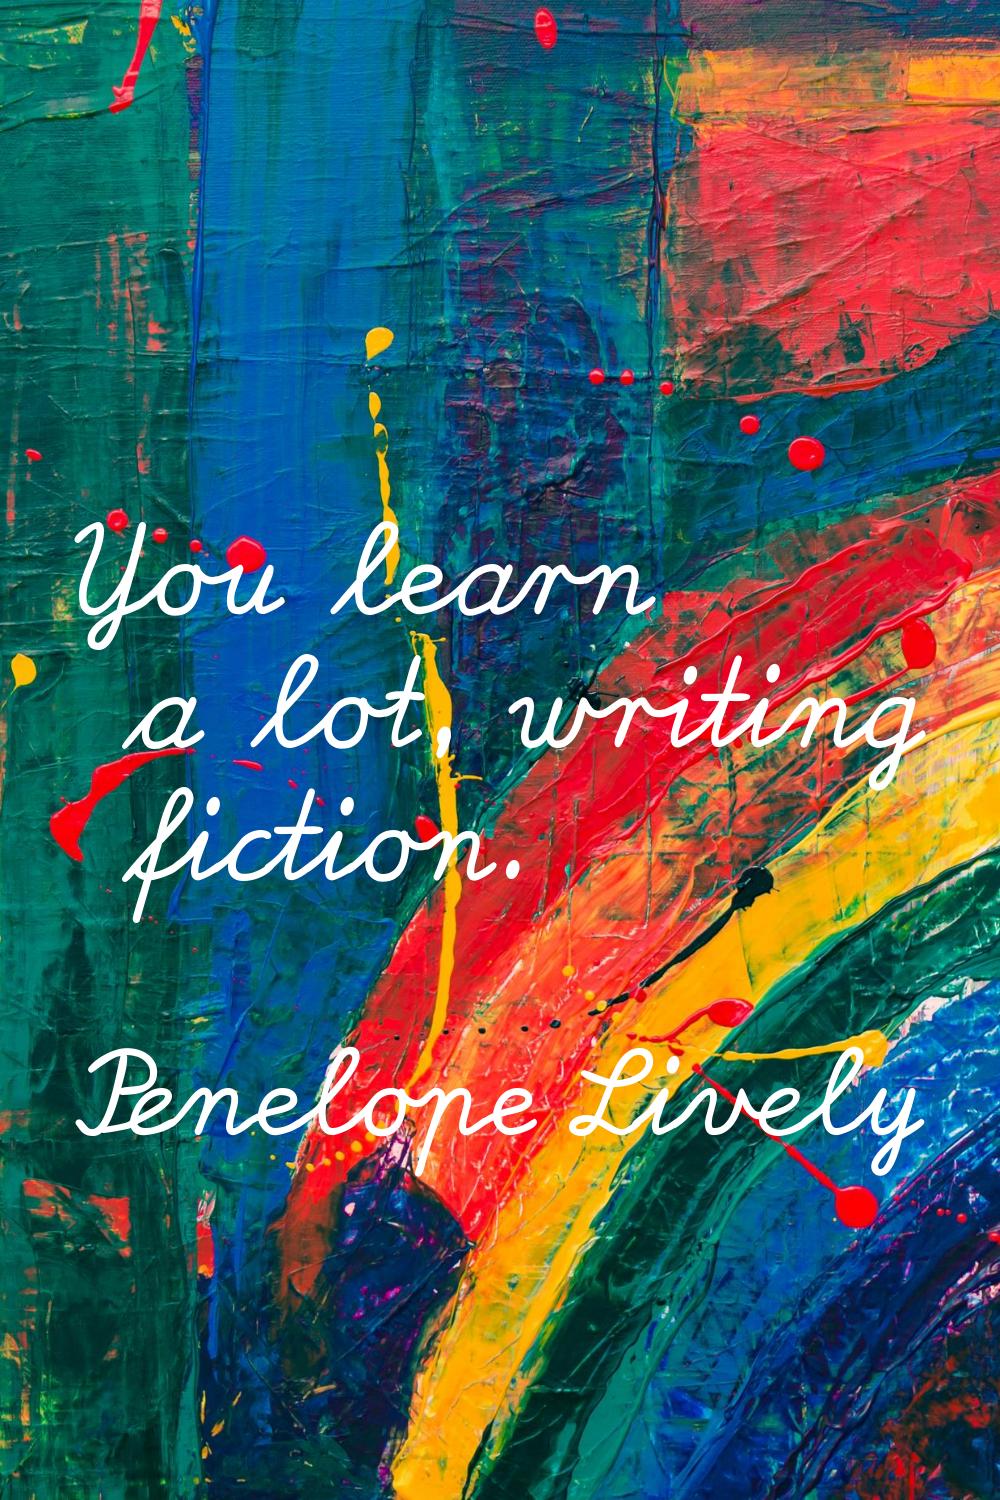 You learn a lot, writing fiction.